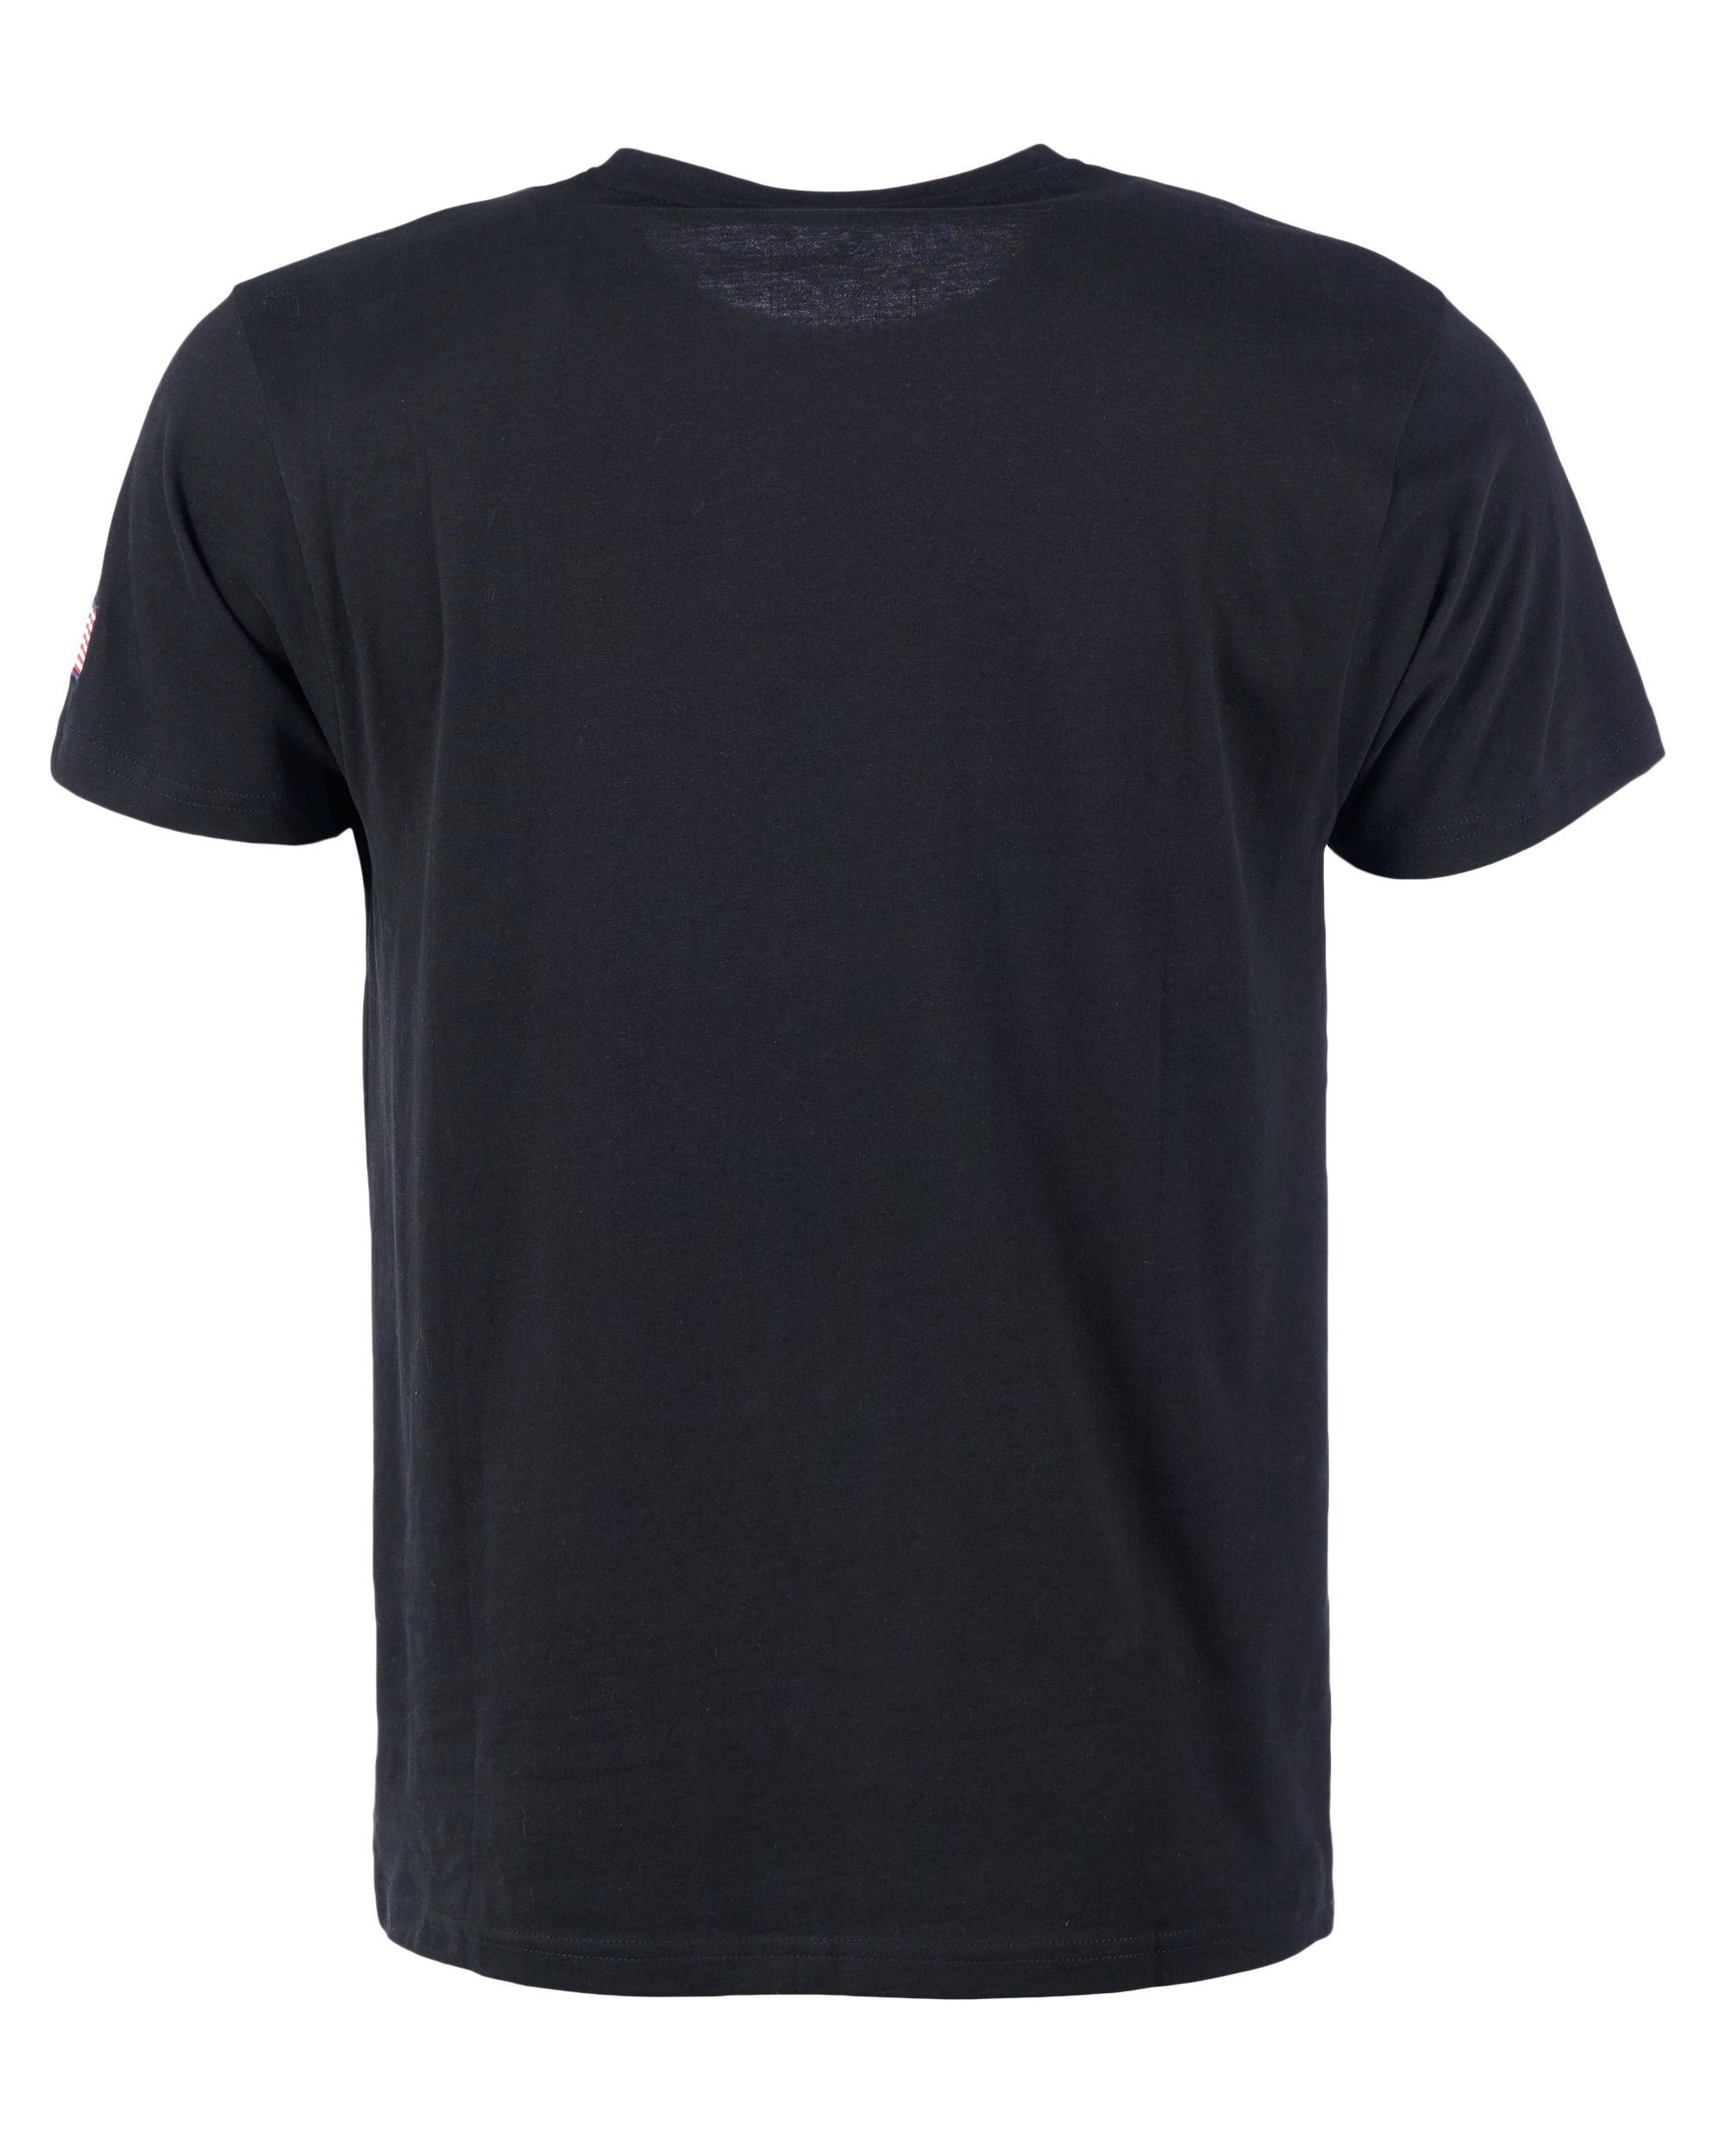 TG20213006 black TOP GUN T-Shirt